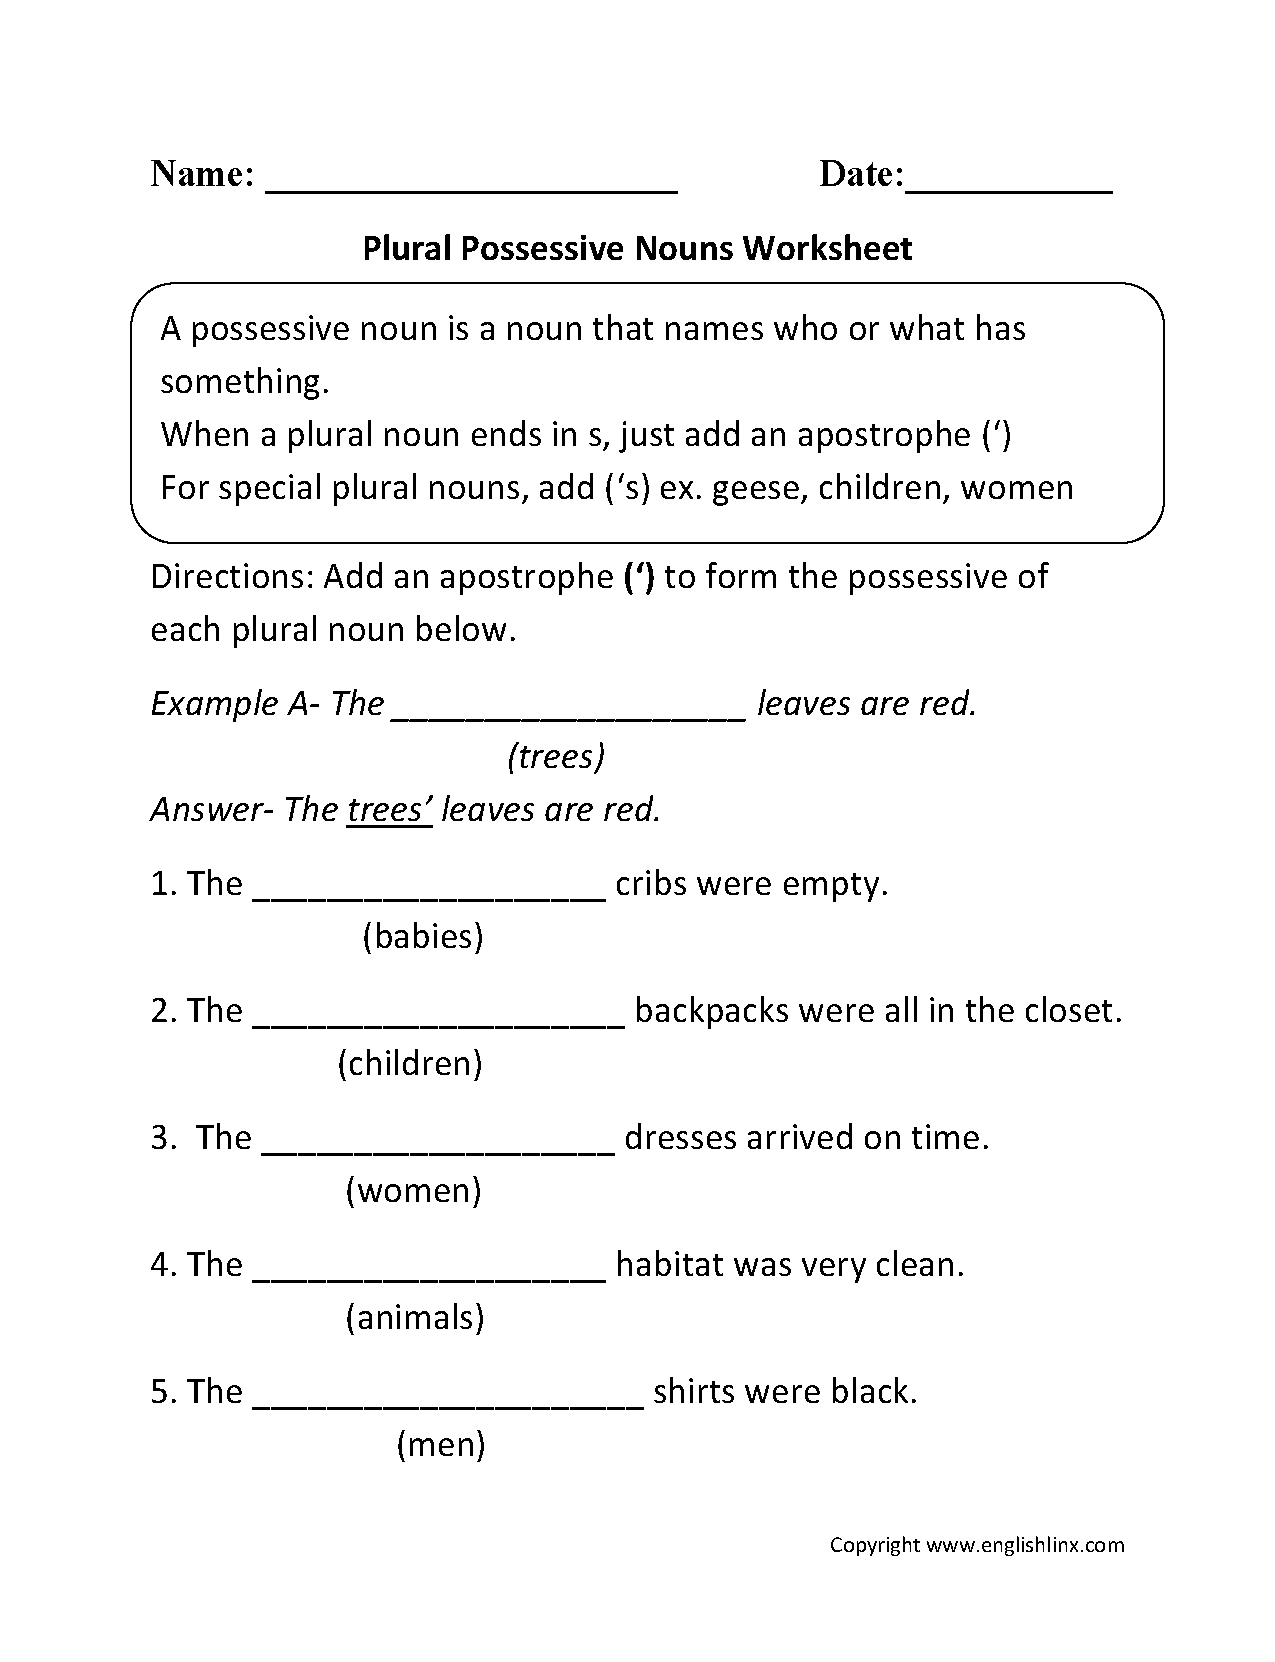 Plural Possessive Nouns Worksheets